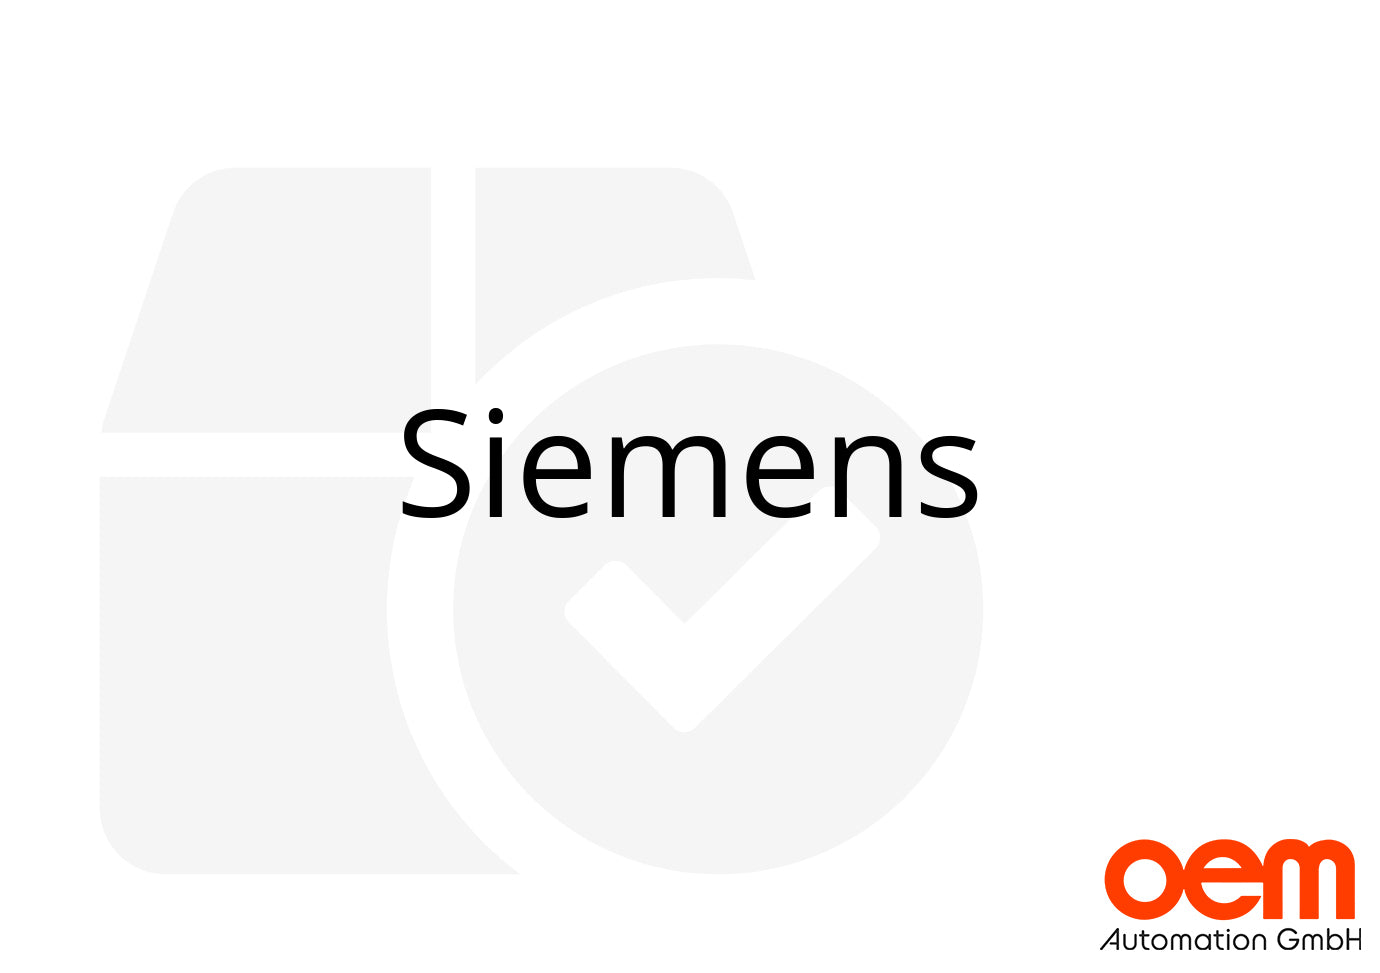 Siemens 3RV2011-0FA10